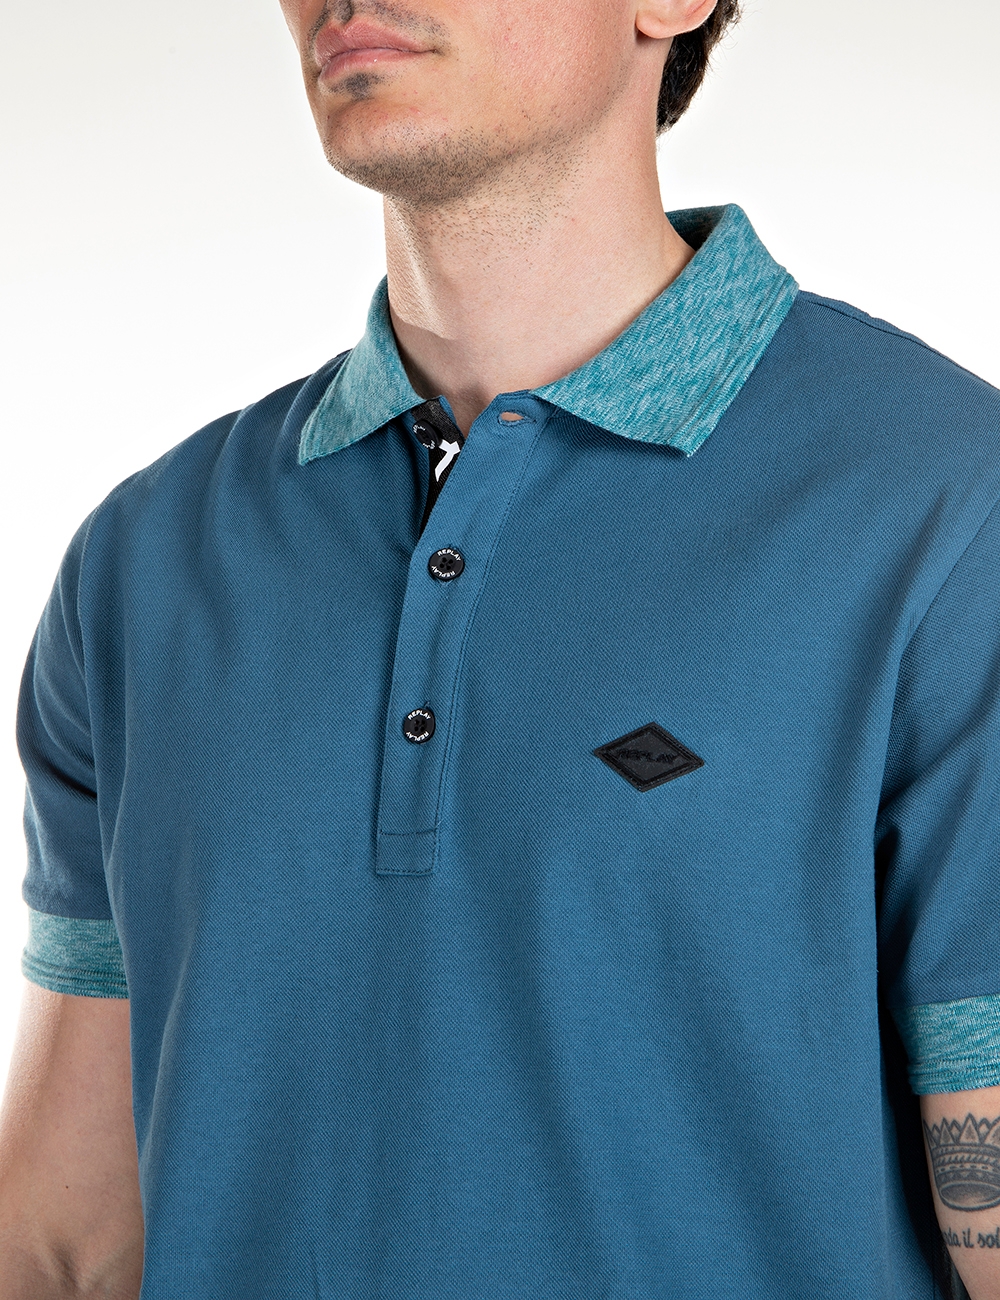 REPLAY | Polo shirt in stretch melange piqué